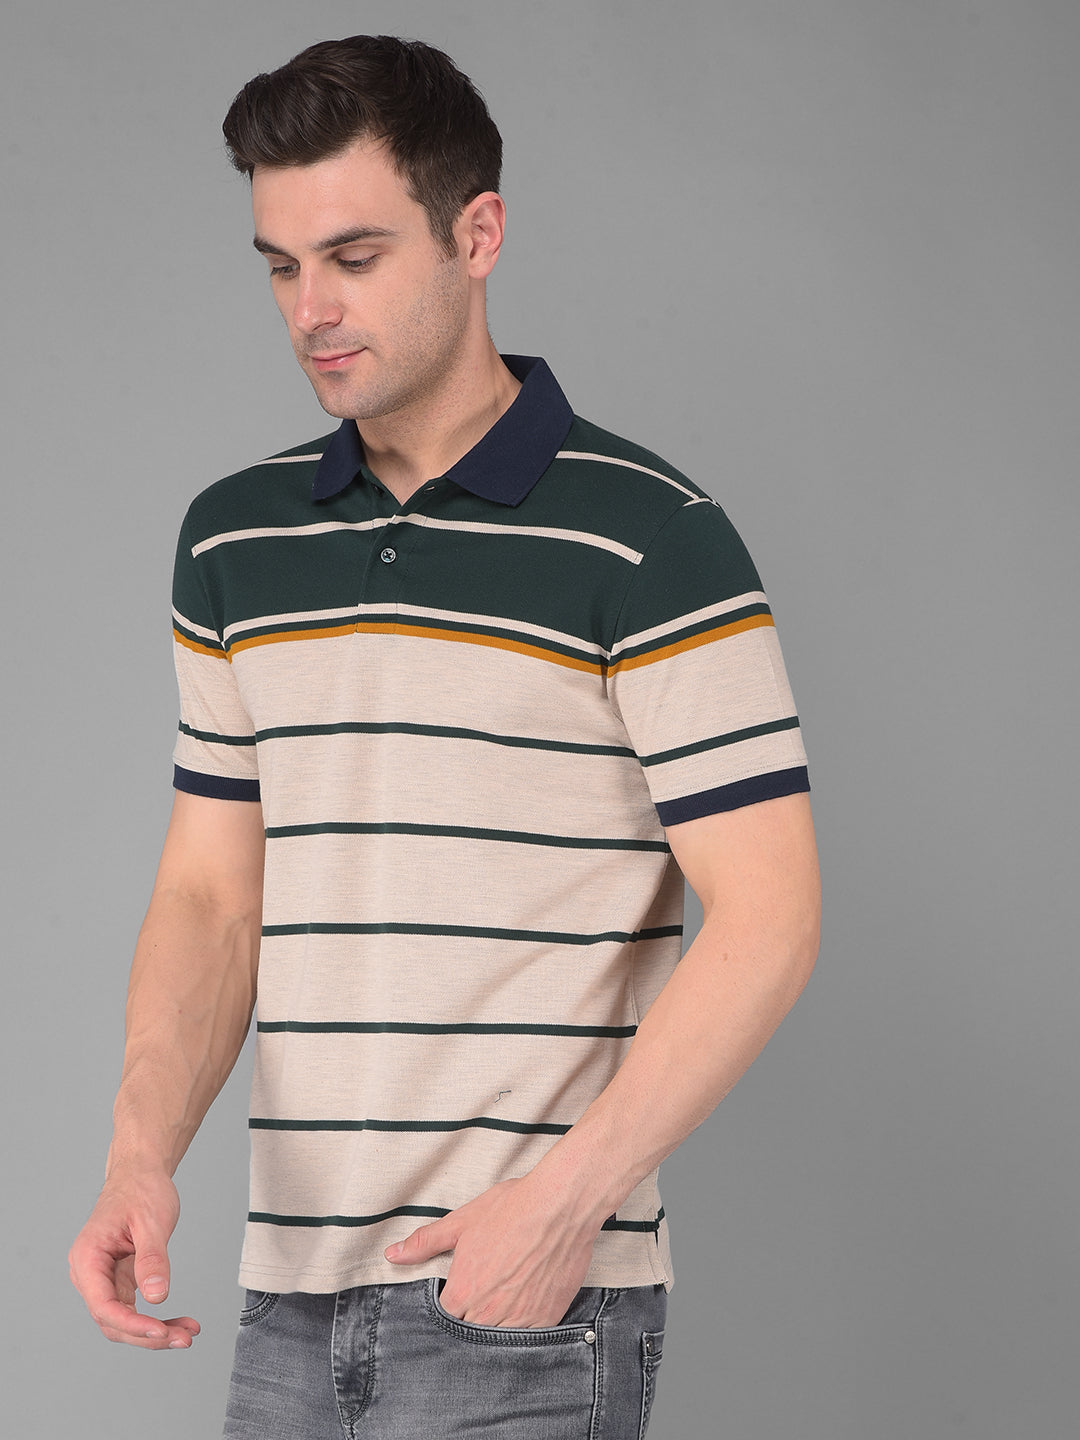 cobb almond green striped polo neck t-shirt